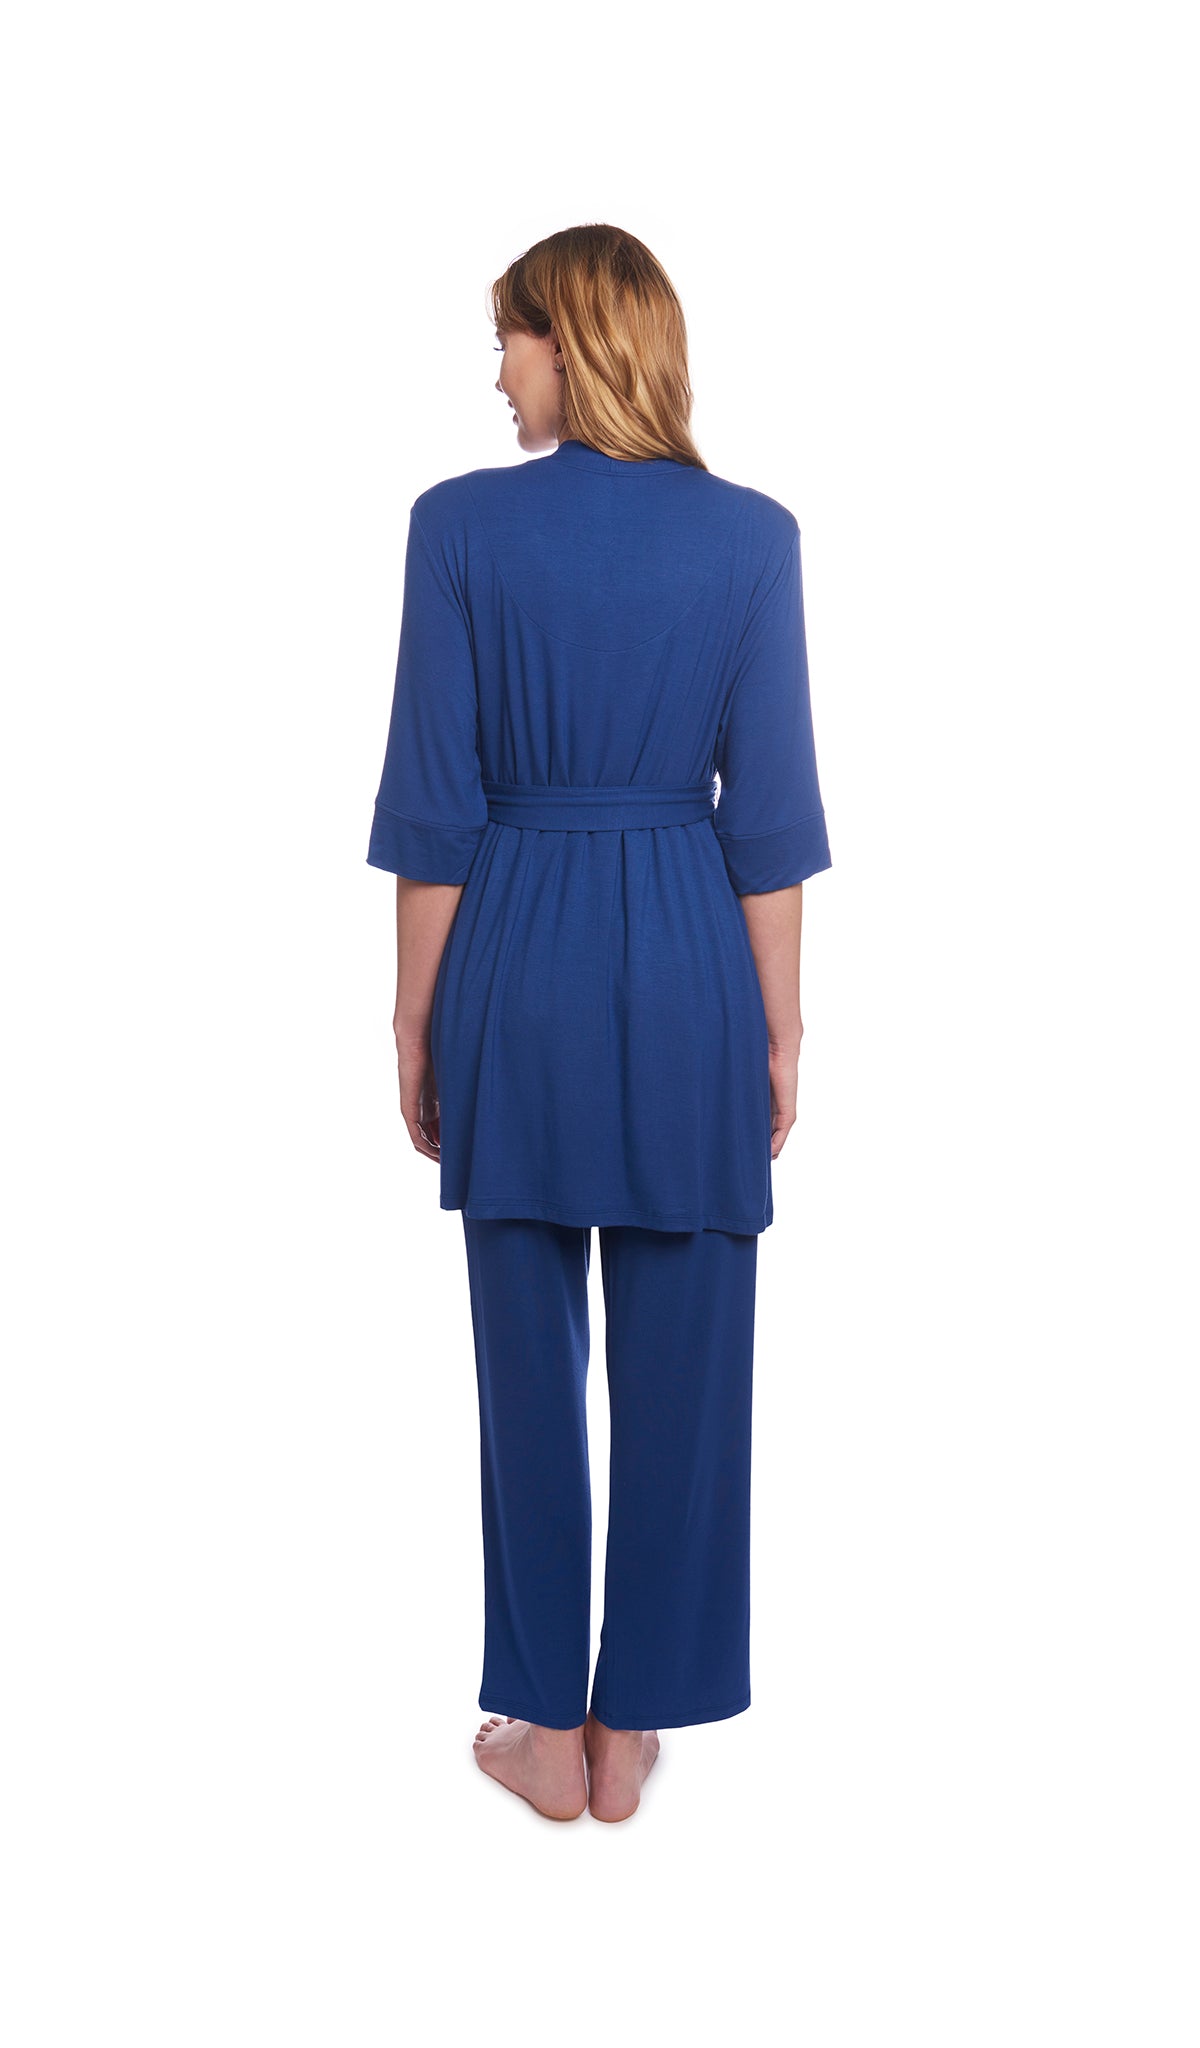 Denim Blue Analise 5-Piece Set, back shot of woman wearing robe and pant.